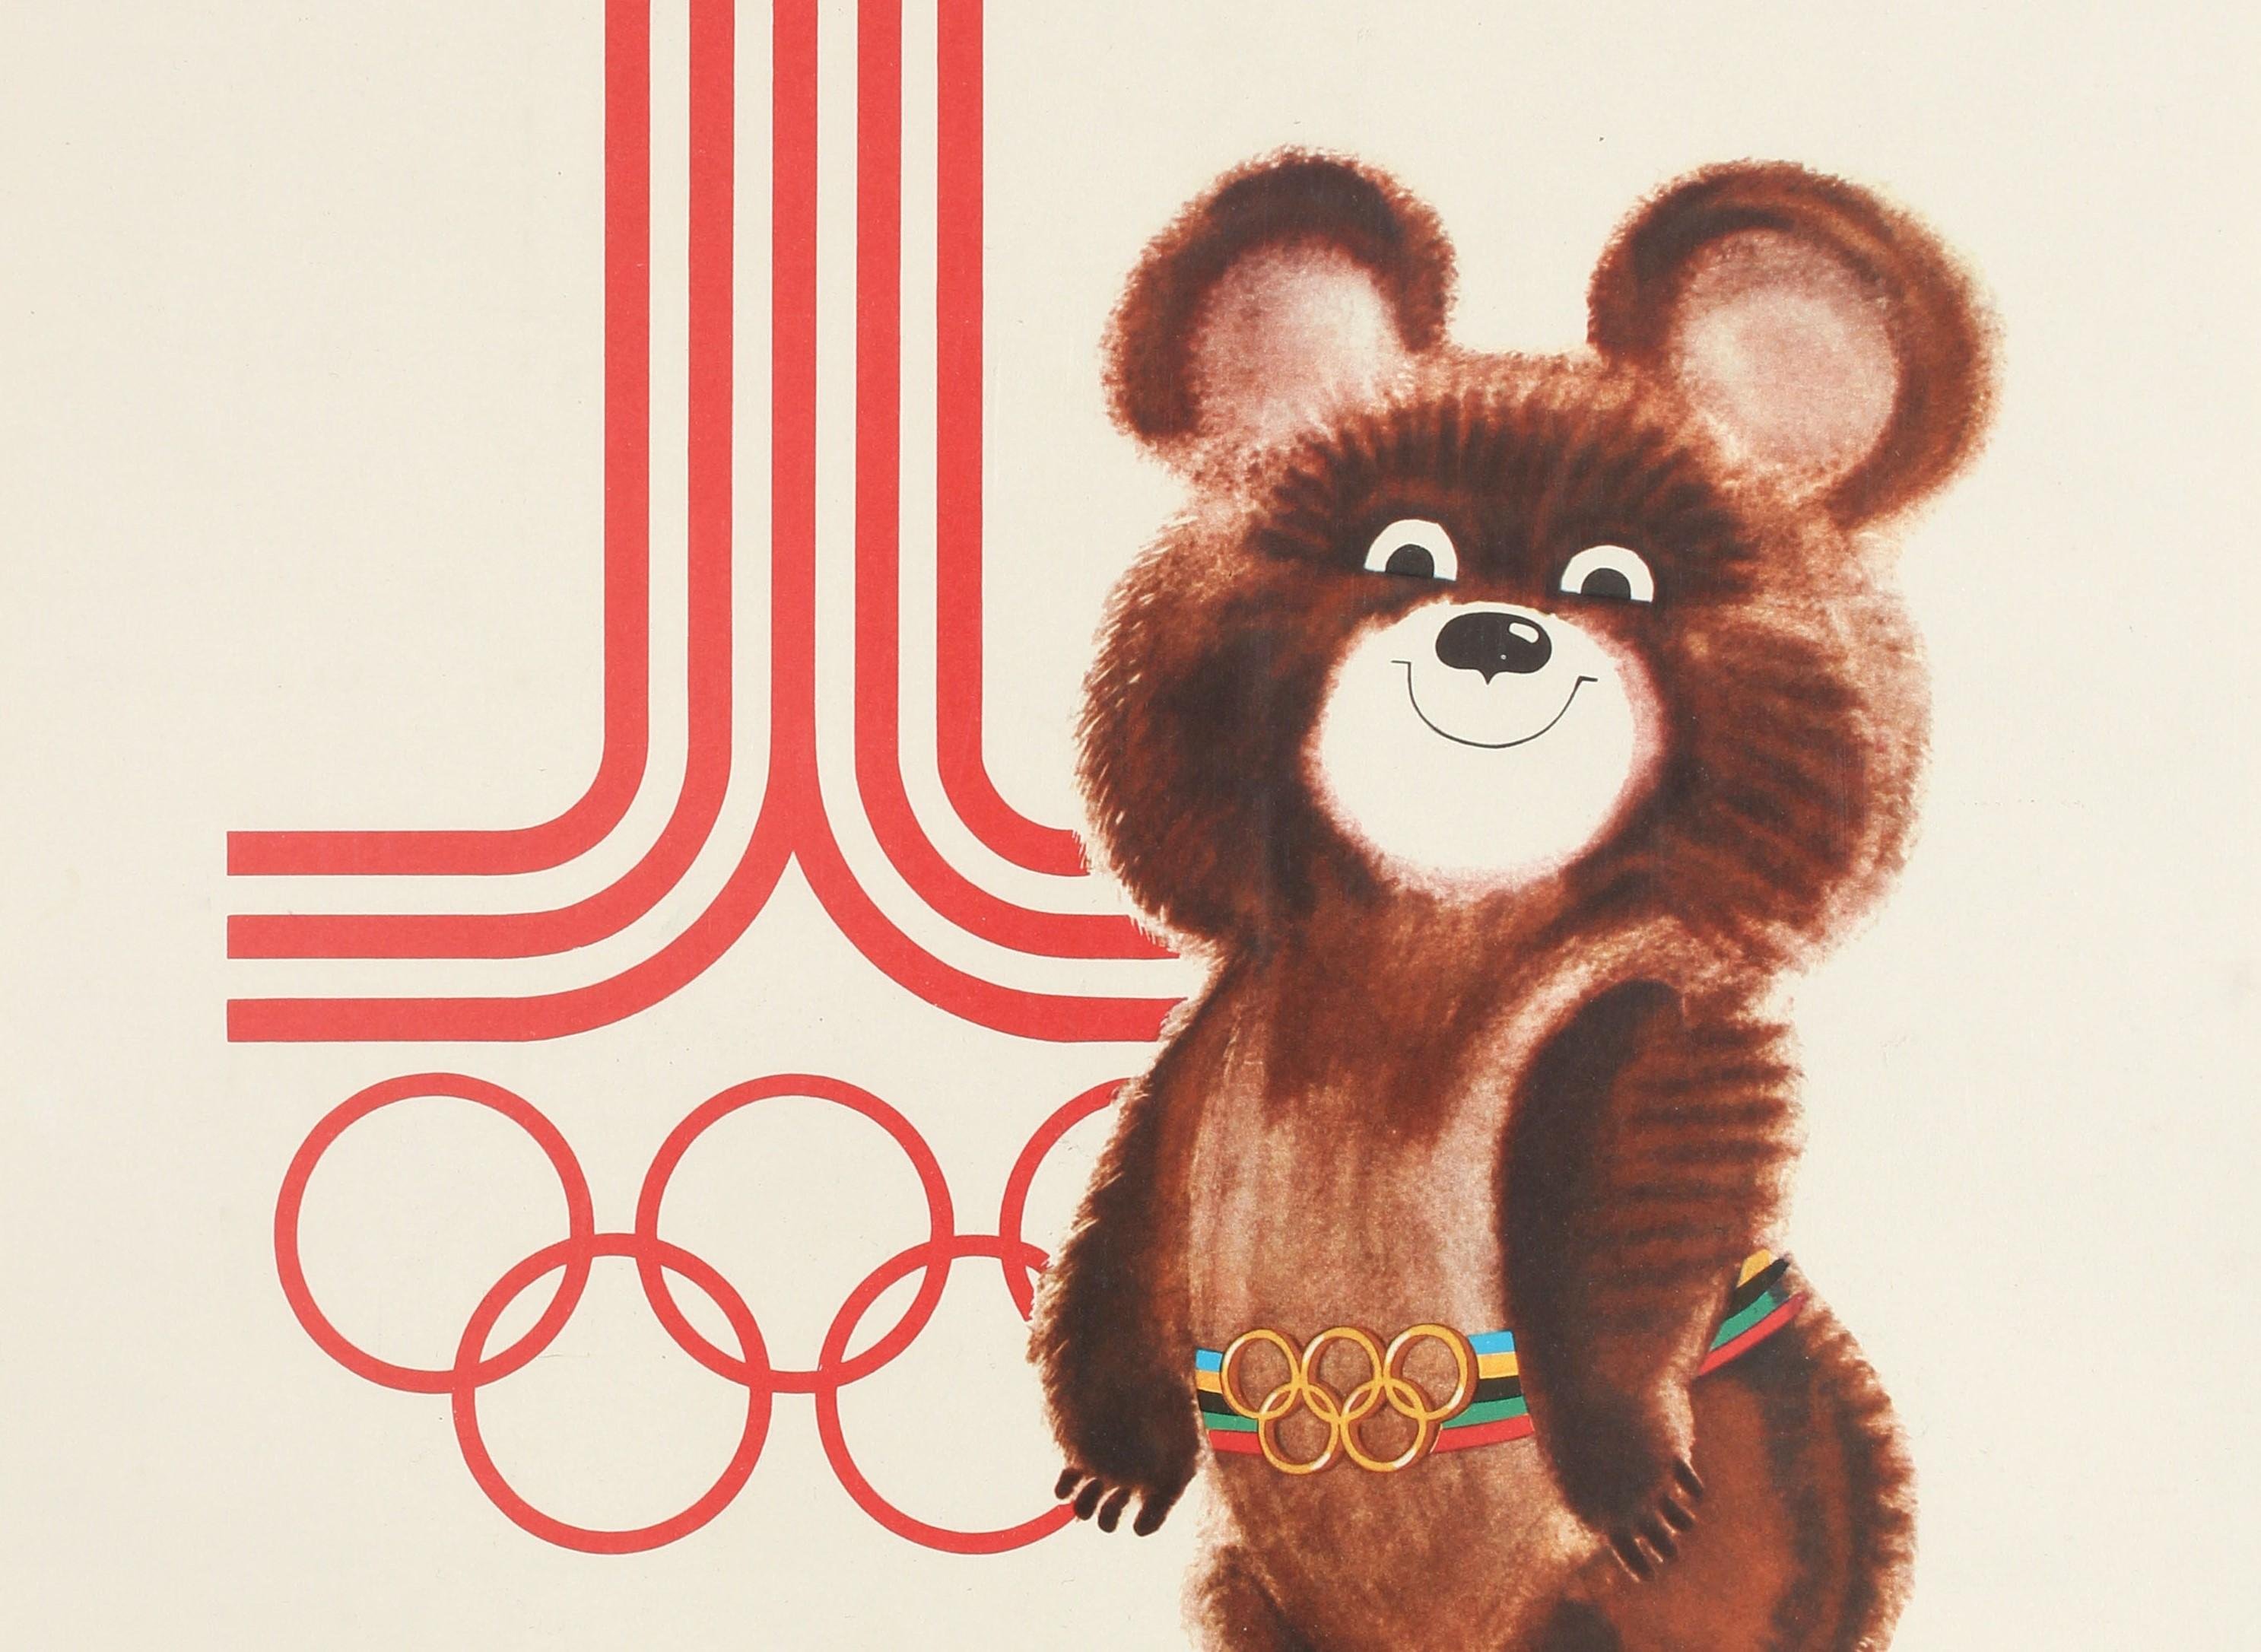 Олимпийский мишка 1980 картинки игрушка